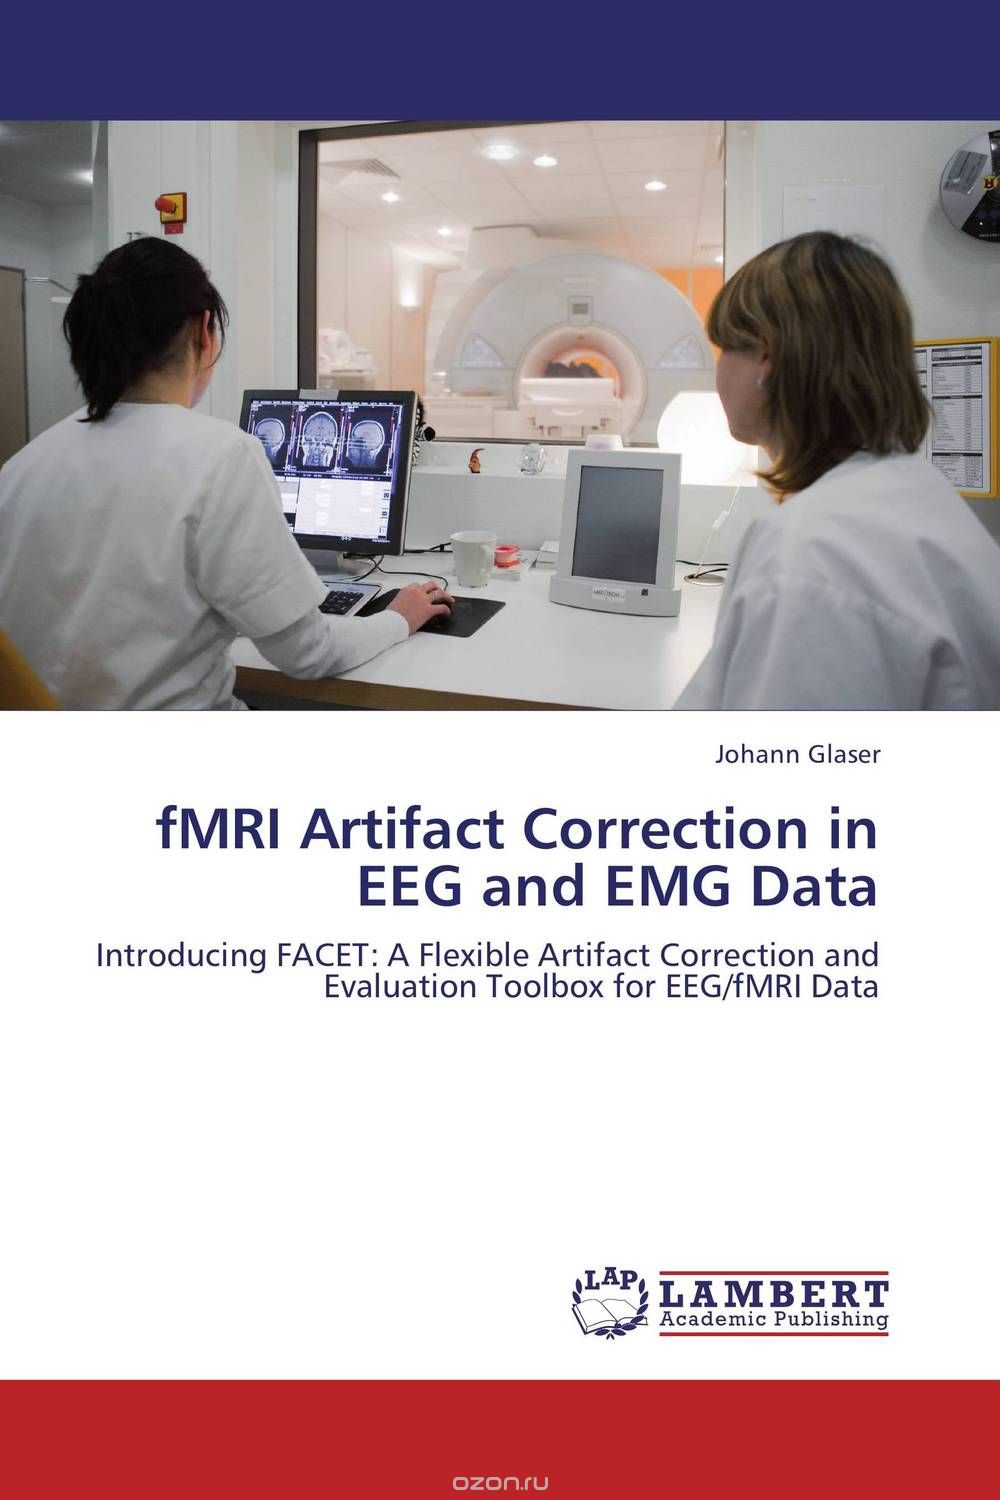 fMRI Artifact Correction in EEG and EMG Data